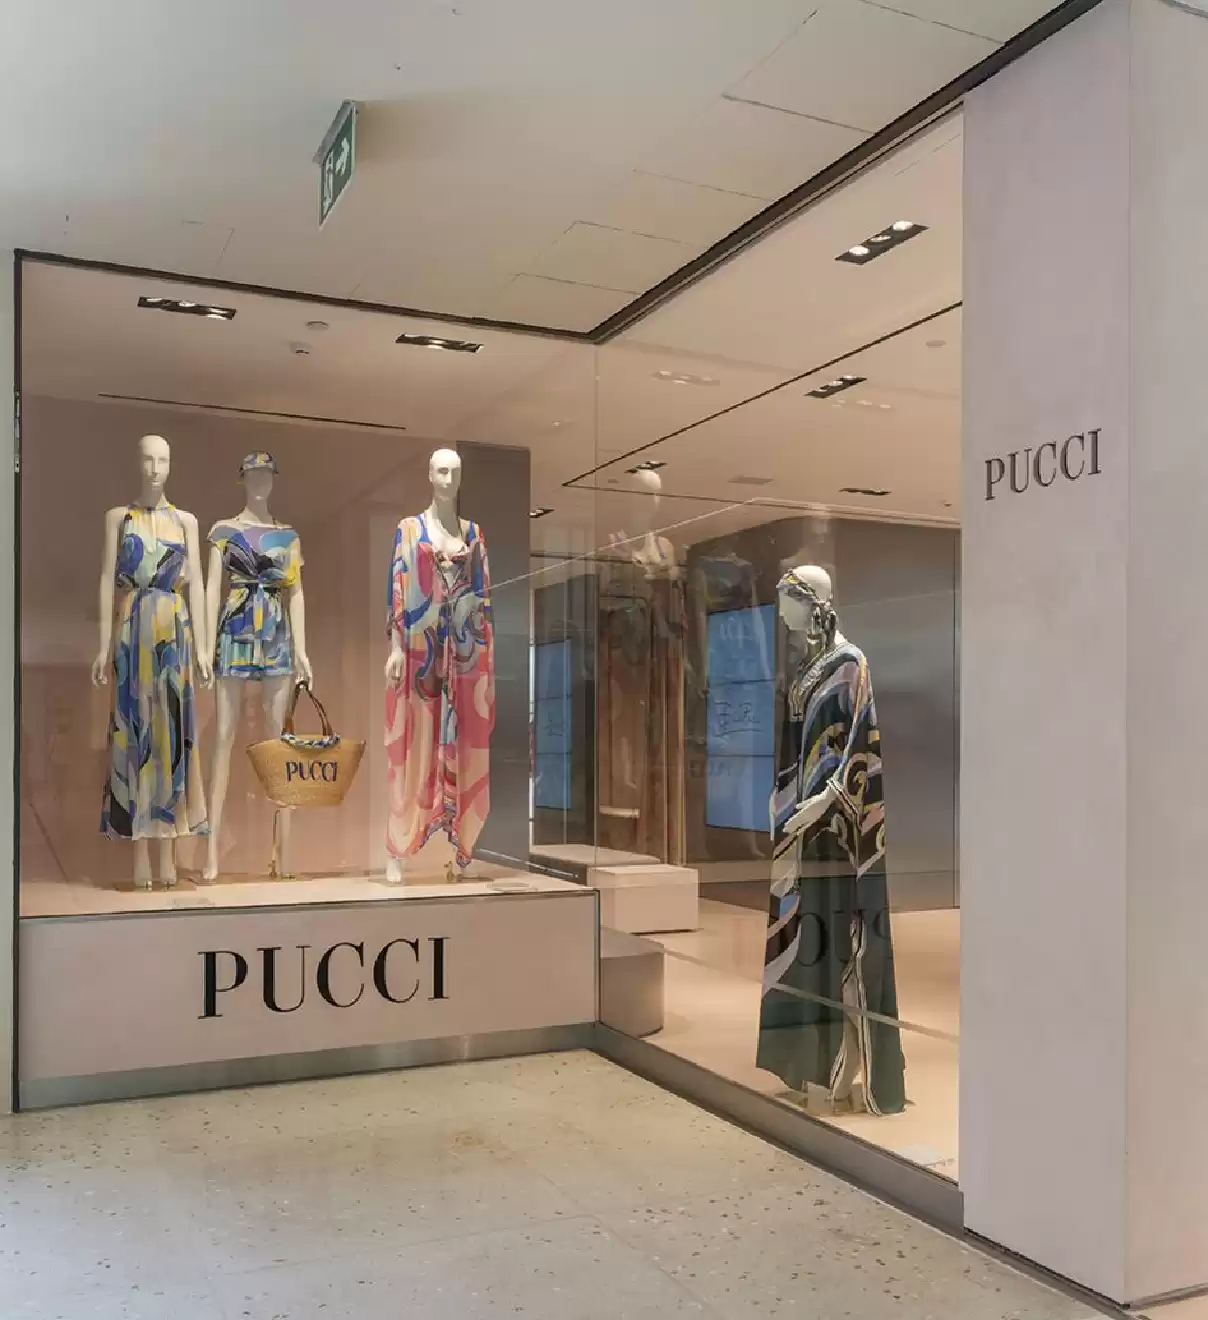 Emilio Pucci inaugura, no CJ Shops Jardins, sua segunda loja em solo nacional